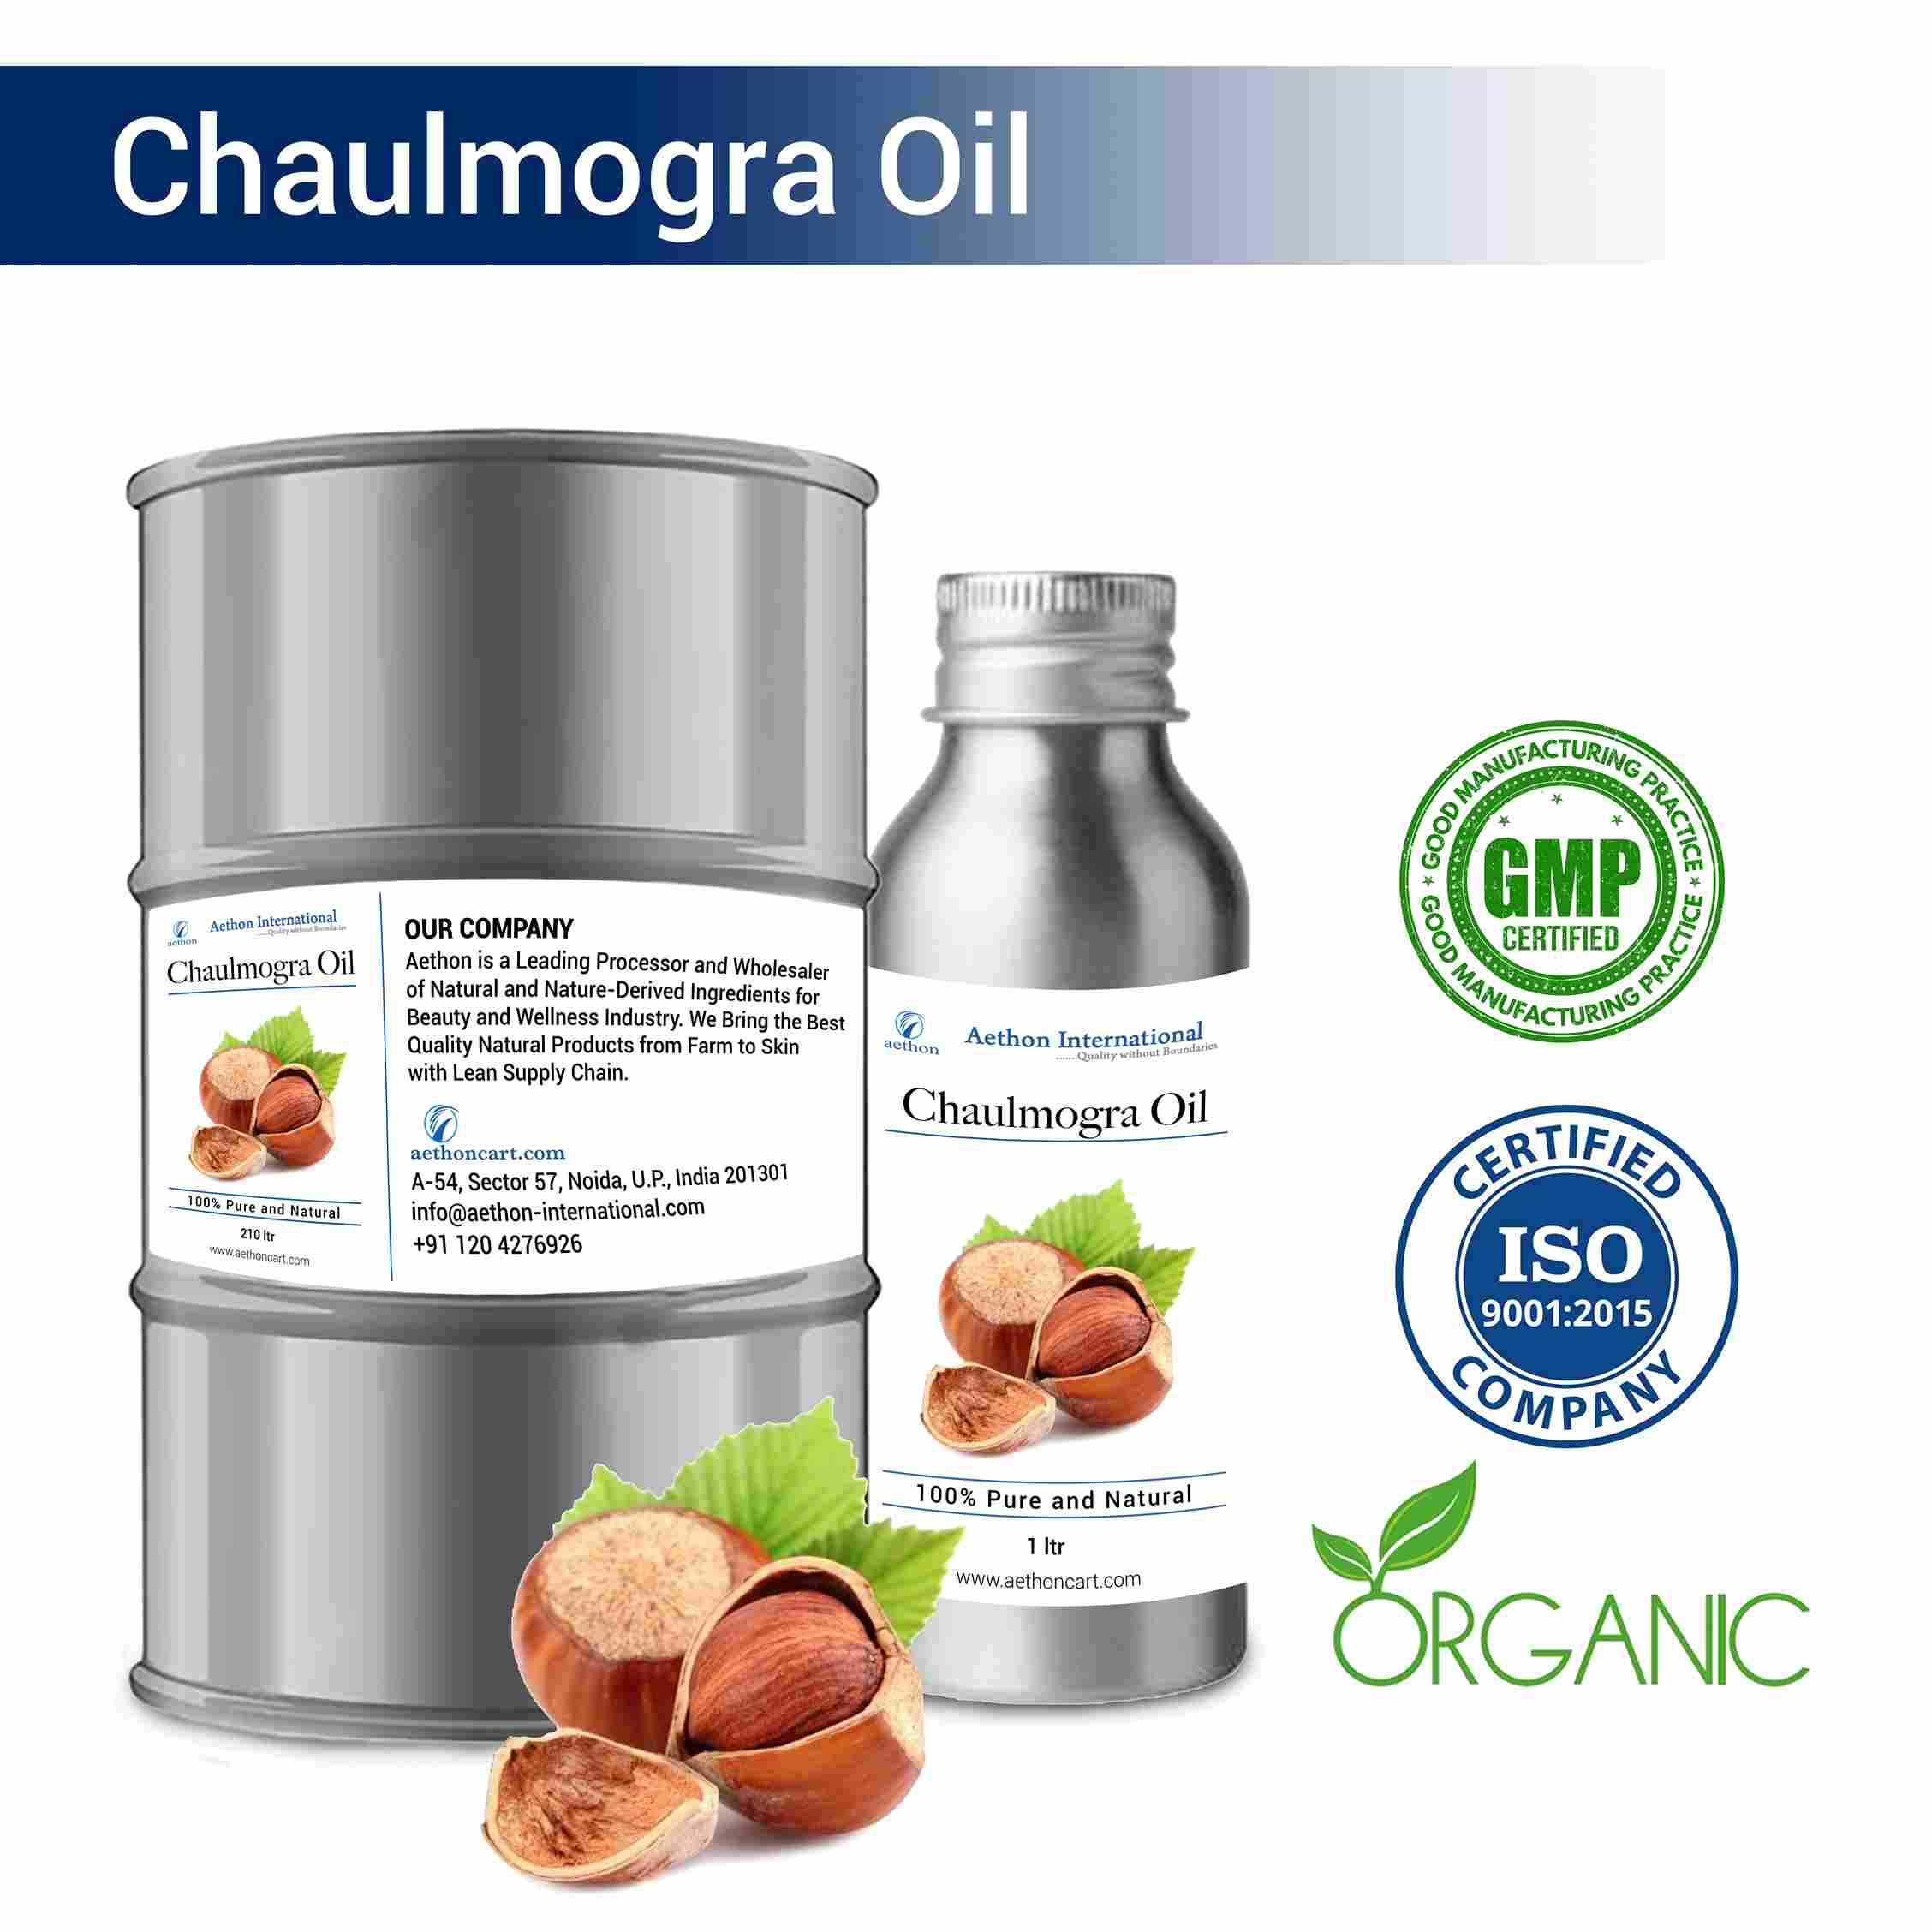 Chaulmogra Oil